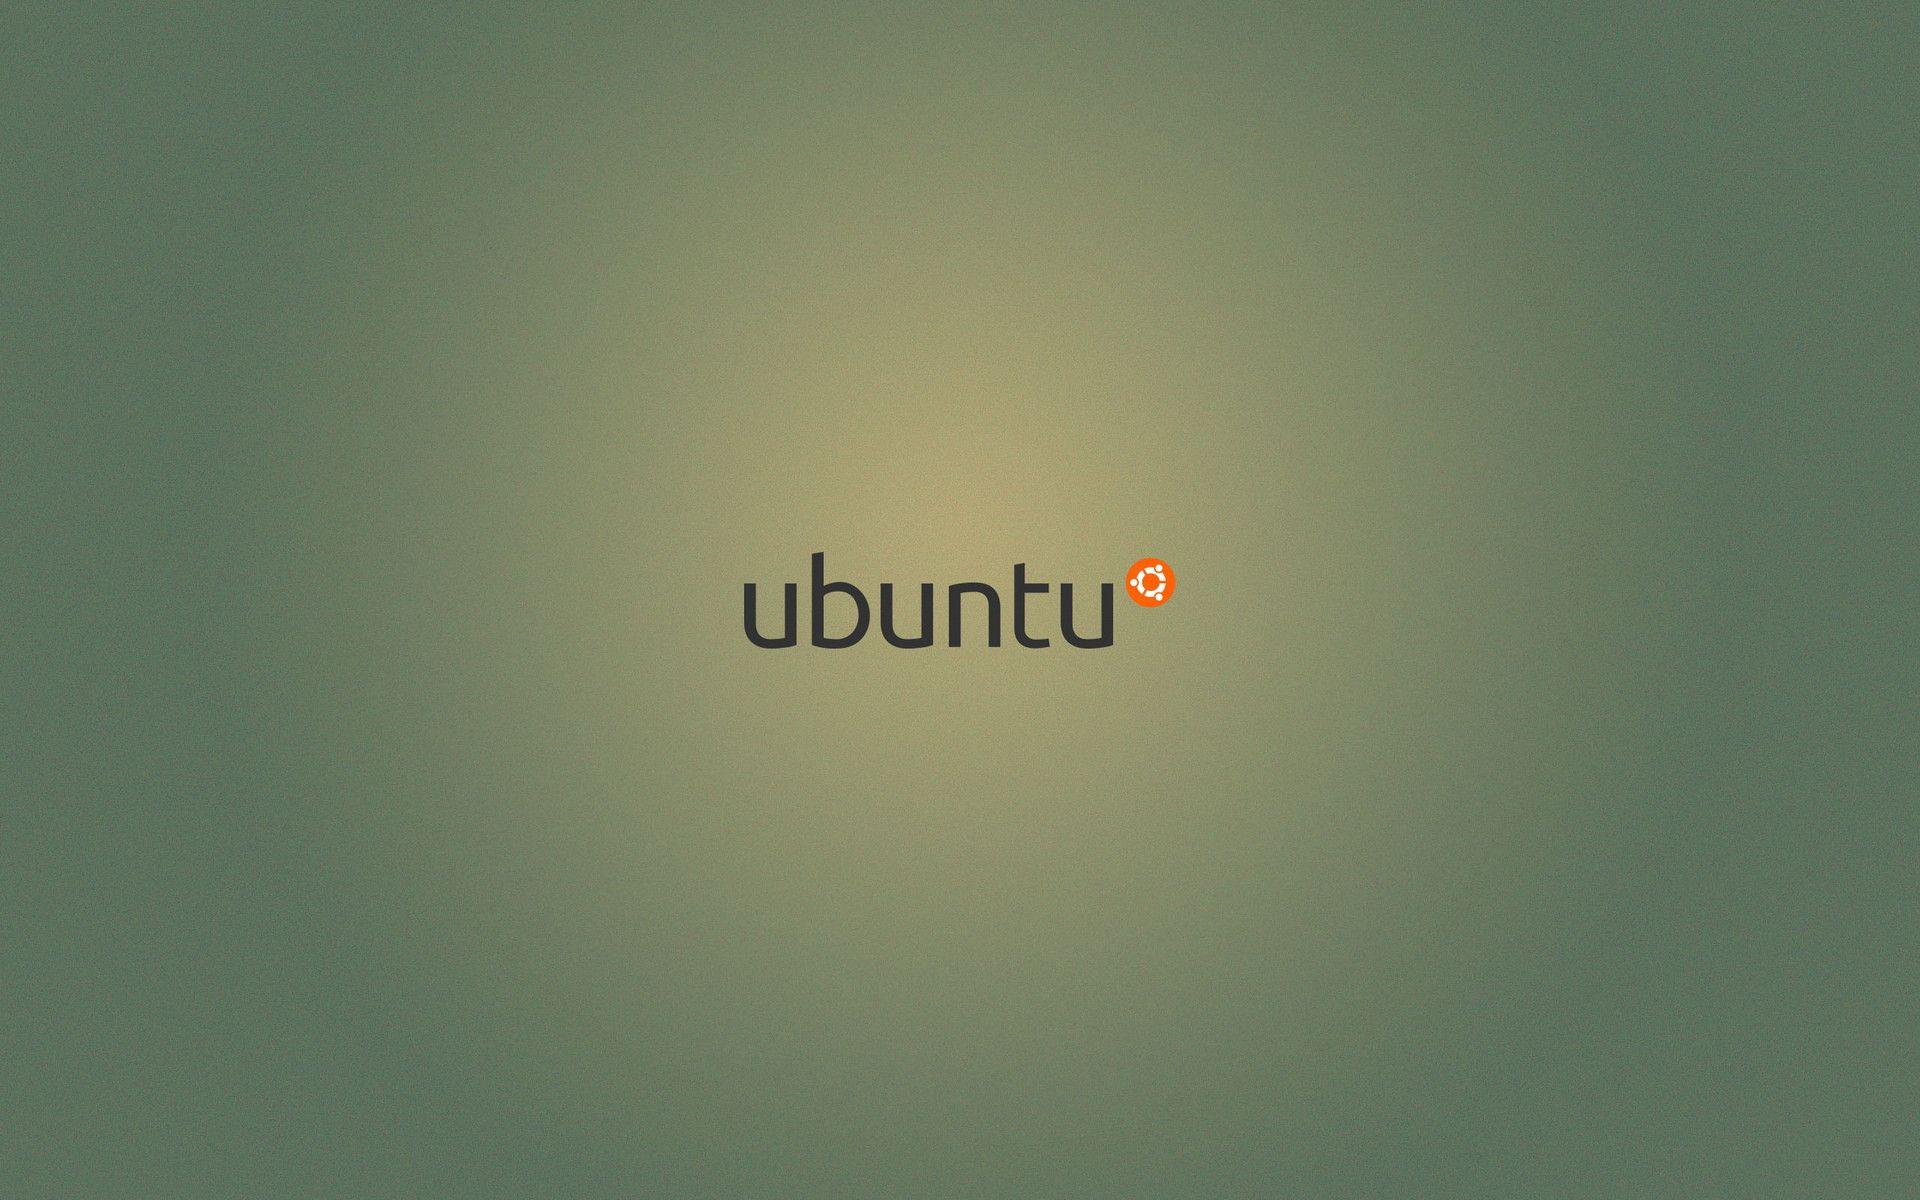 Ubuntu Wallpaper. Large HD Wallpaper Database